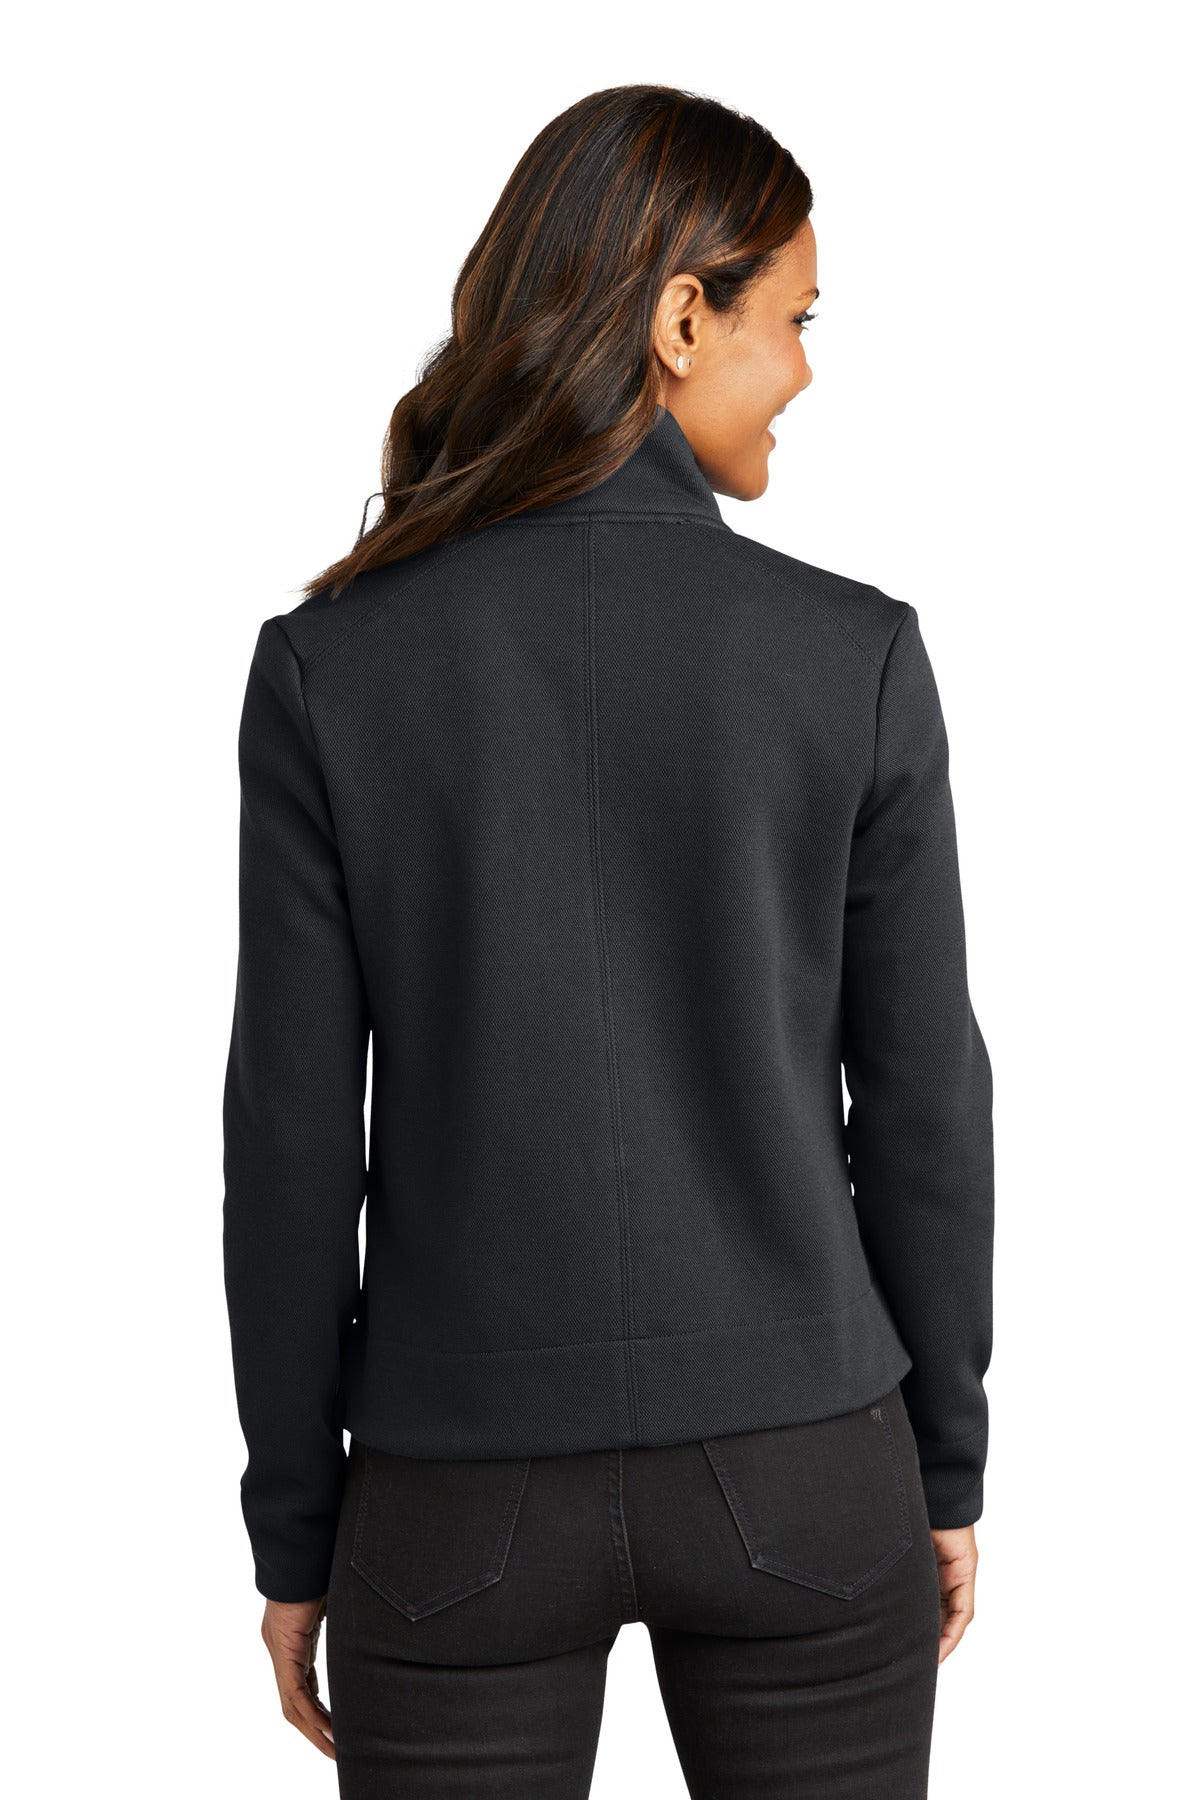 Port Authority® Ladies Network Fleece Jacket L422 - DFW Impression